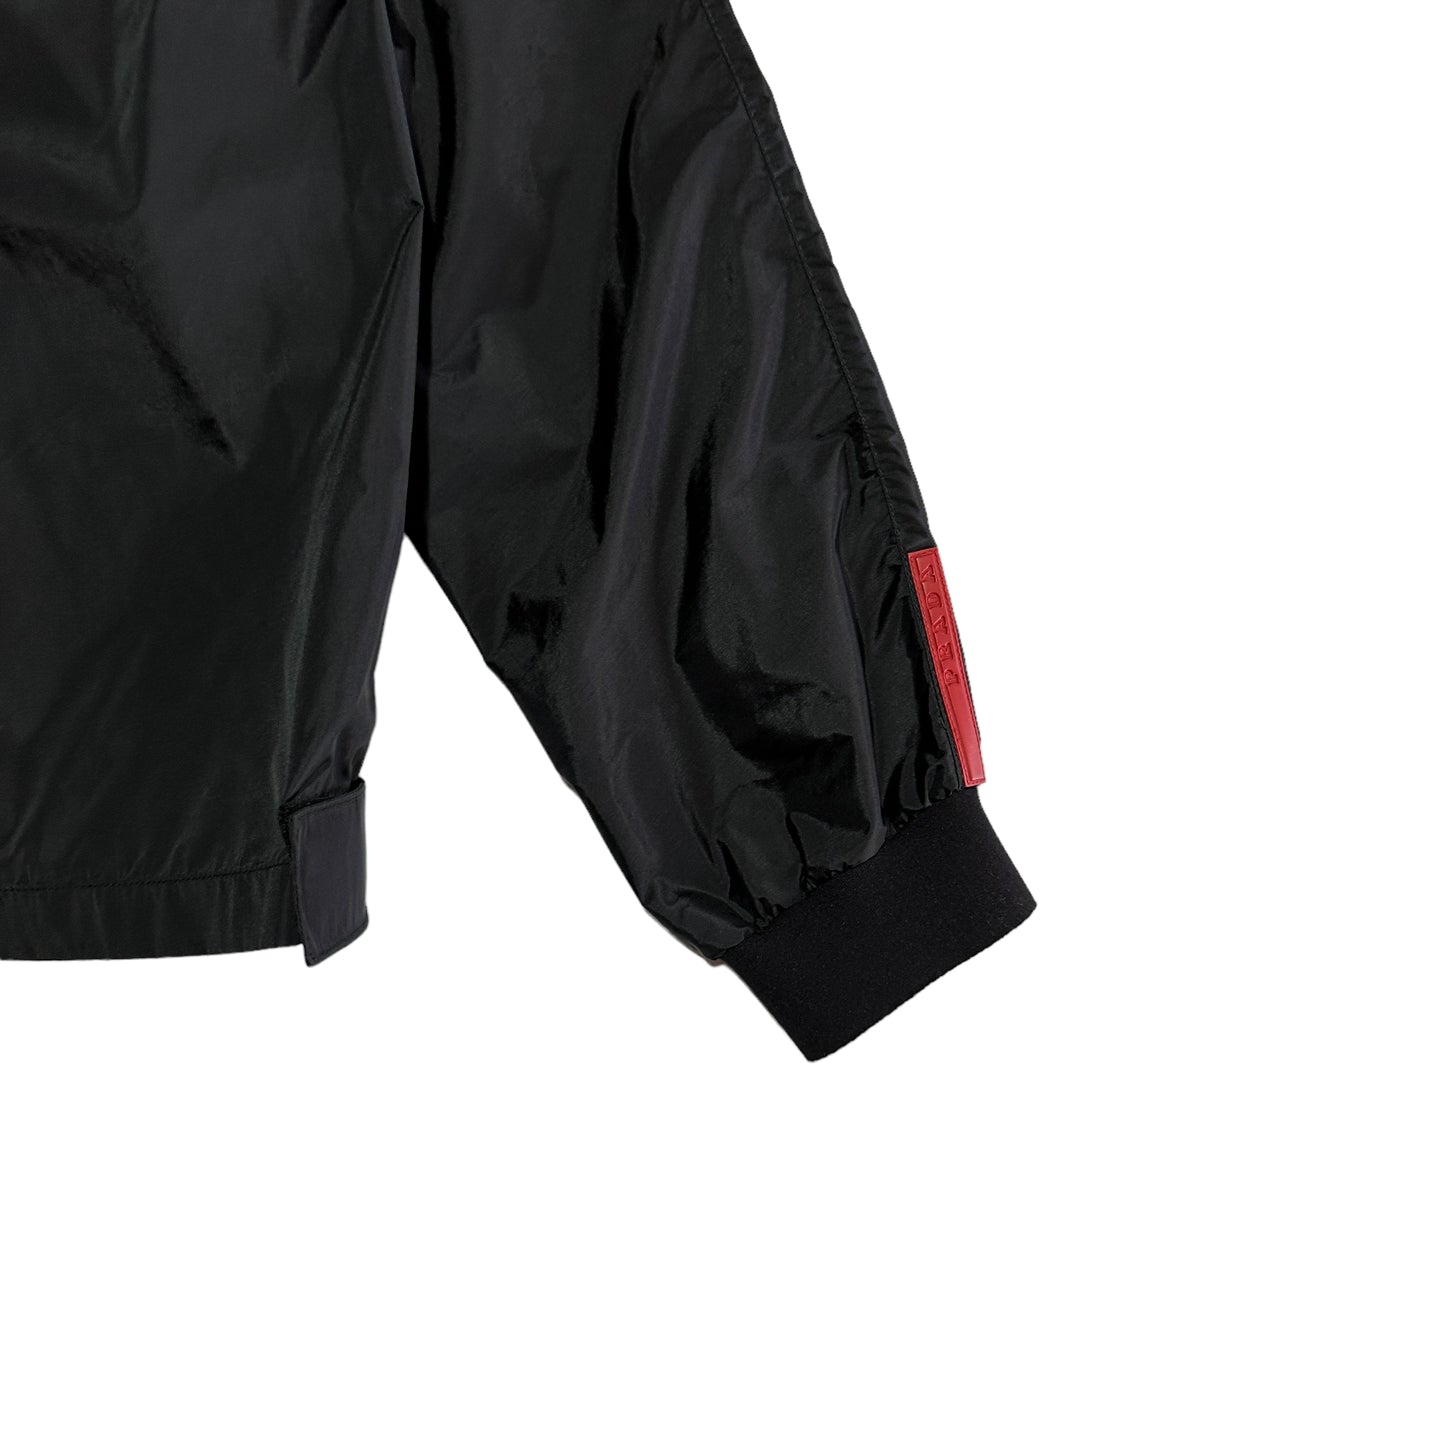 S/S 2000 Prada Asymmetrical Zippered Light Jacket (42)